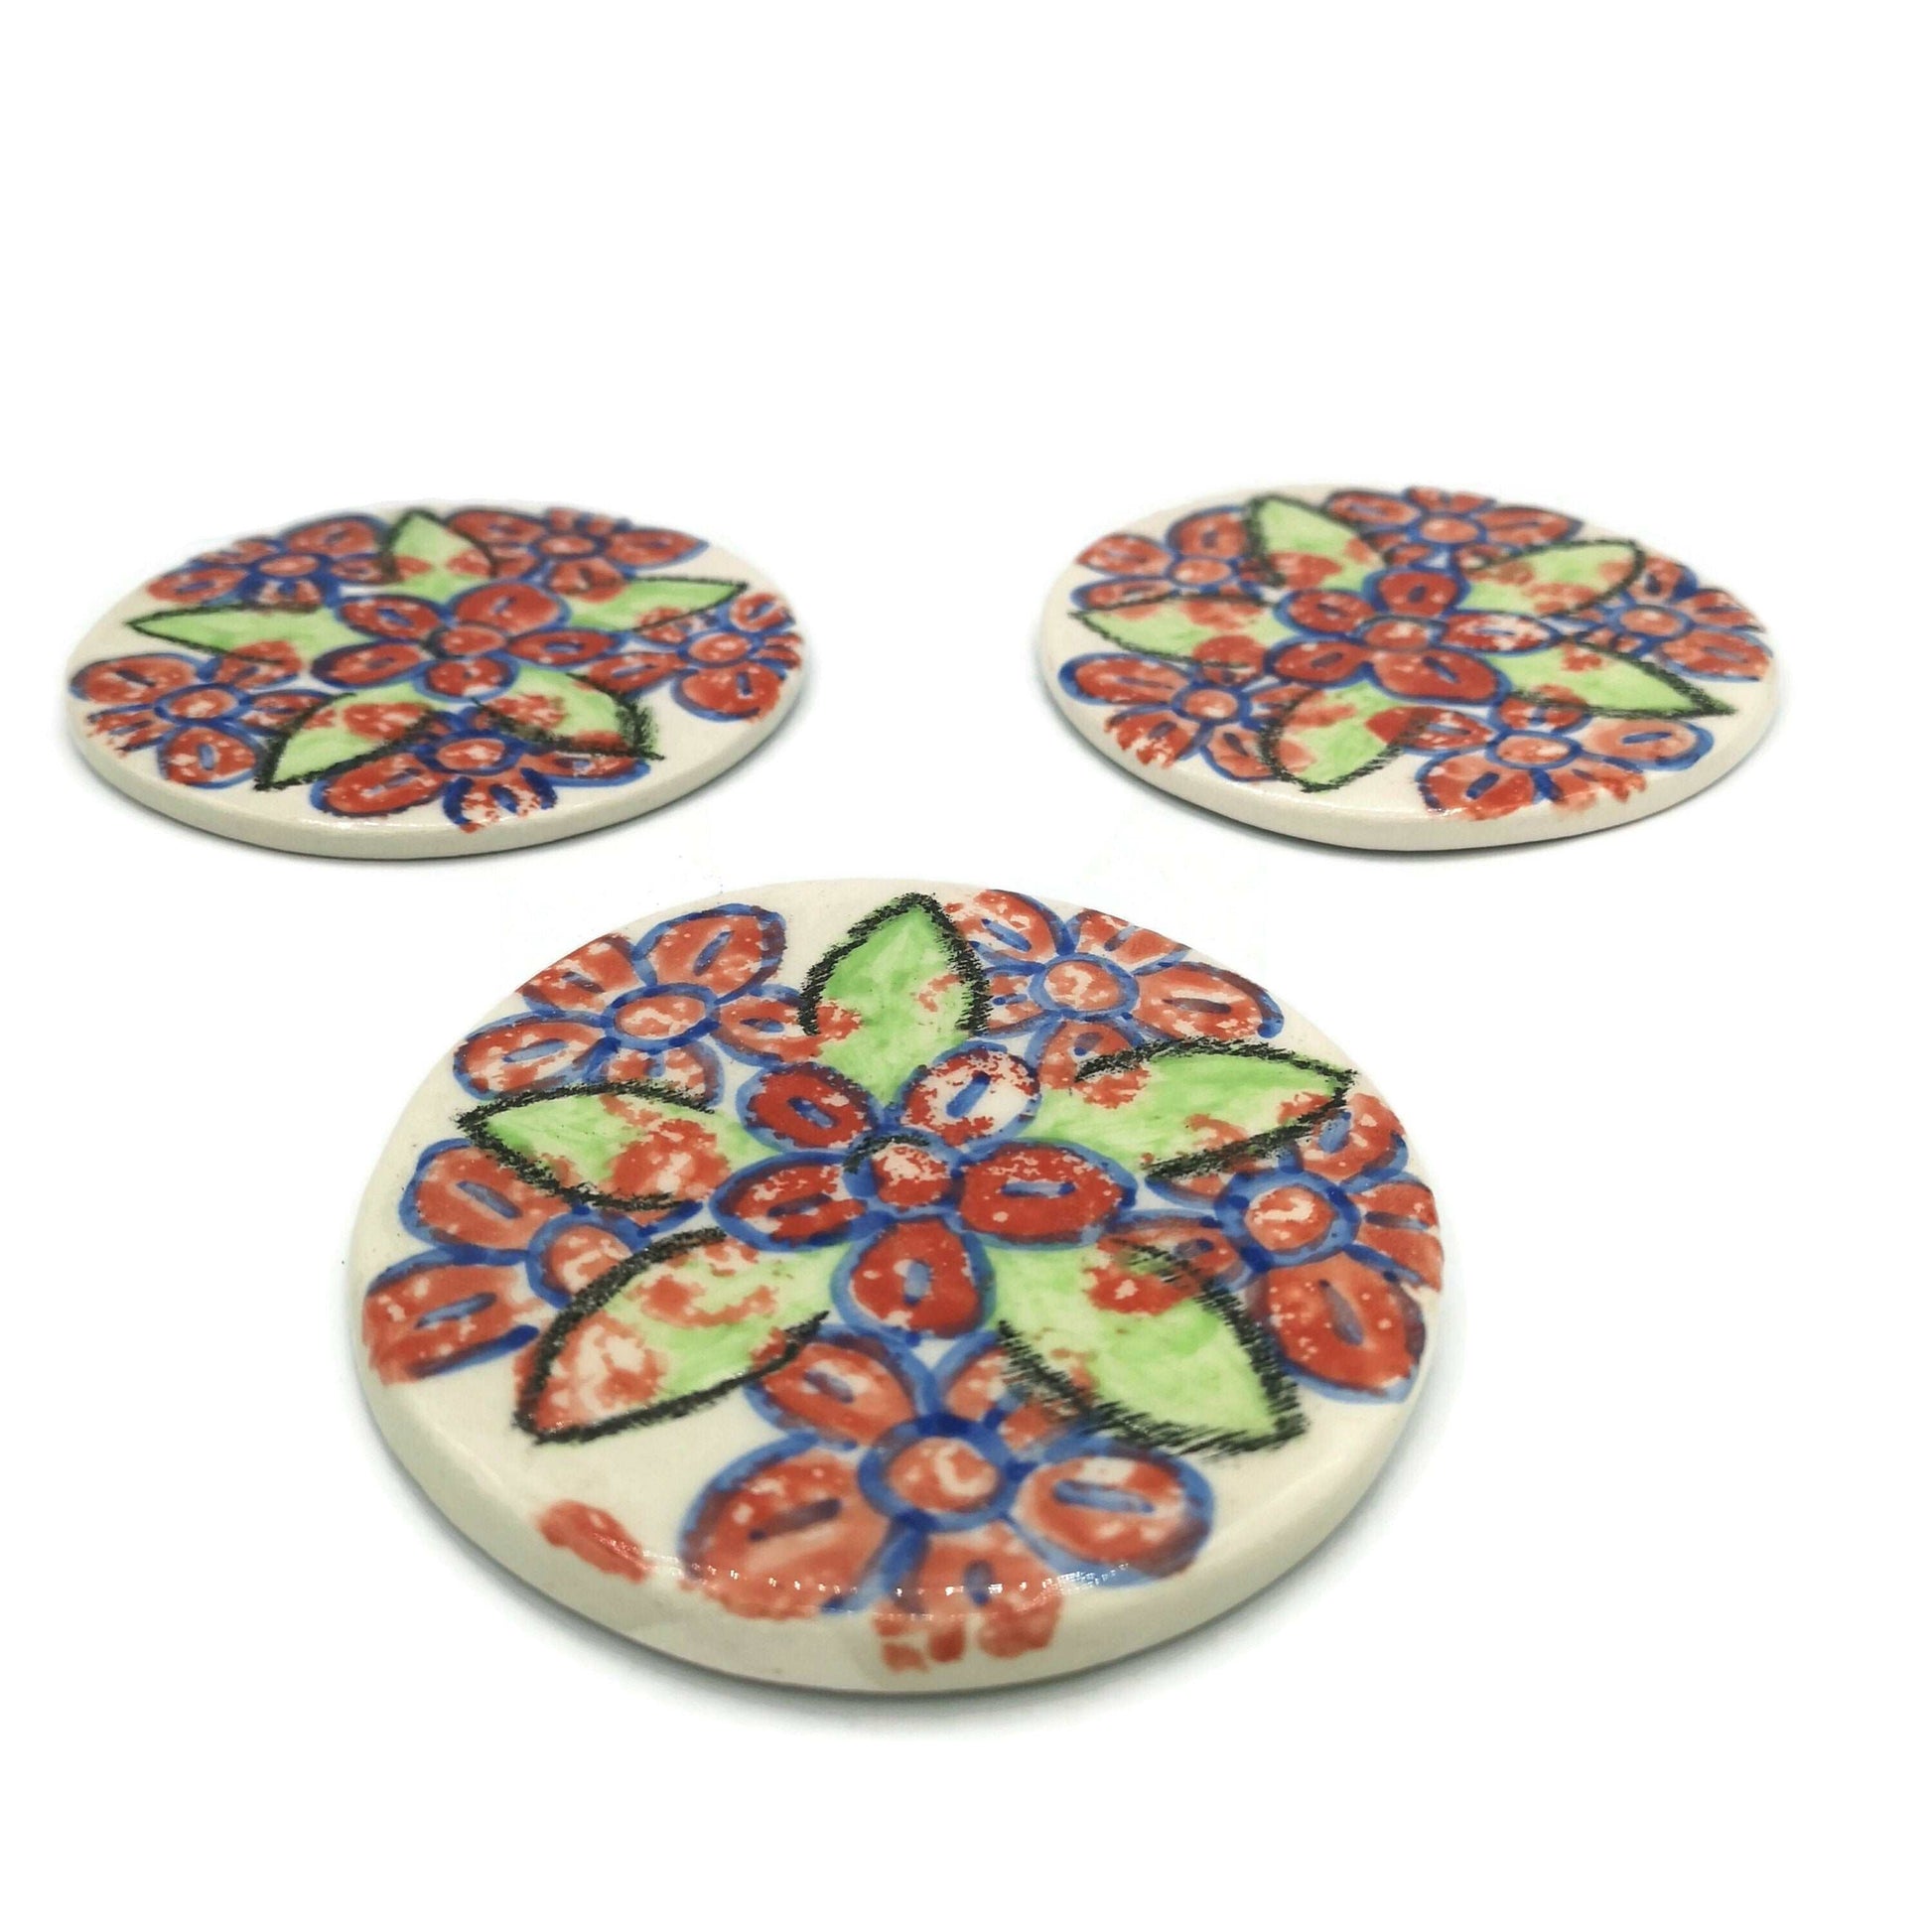 1Pc Handpainted Floral Large Handmade Ceramic Coaster Tile, Office Desk Accessories for Women, Cork Backing Round Artisan Botanical Coaster